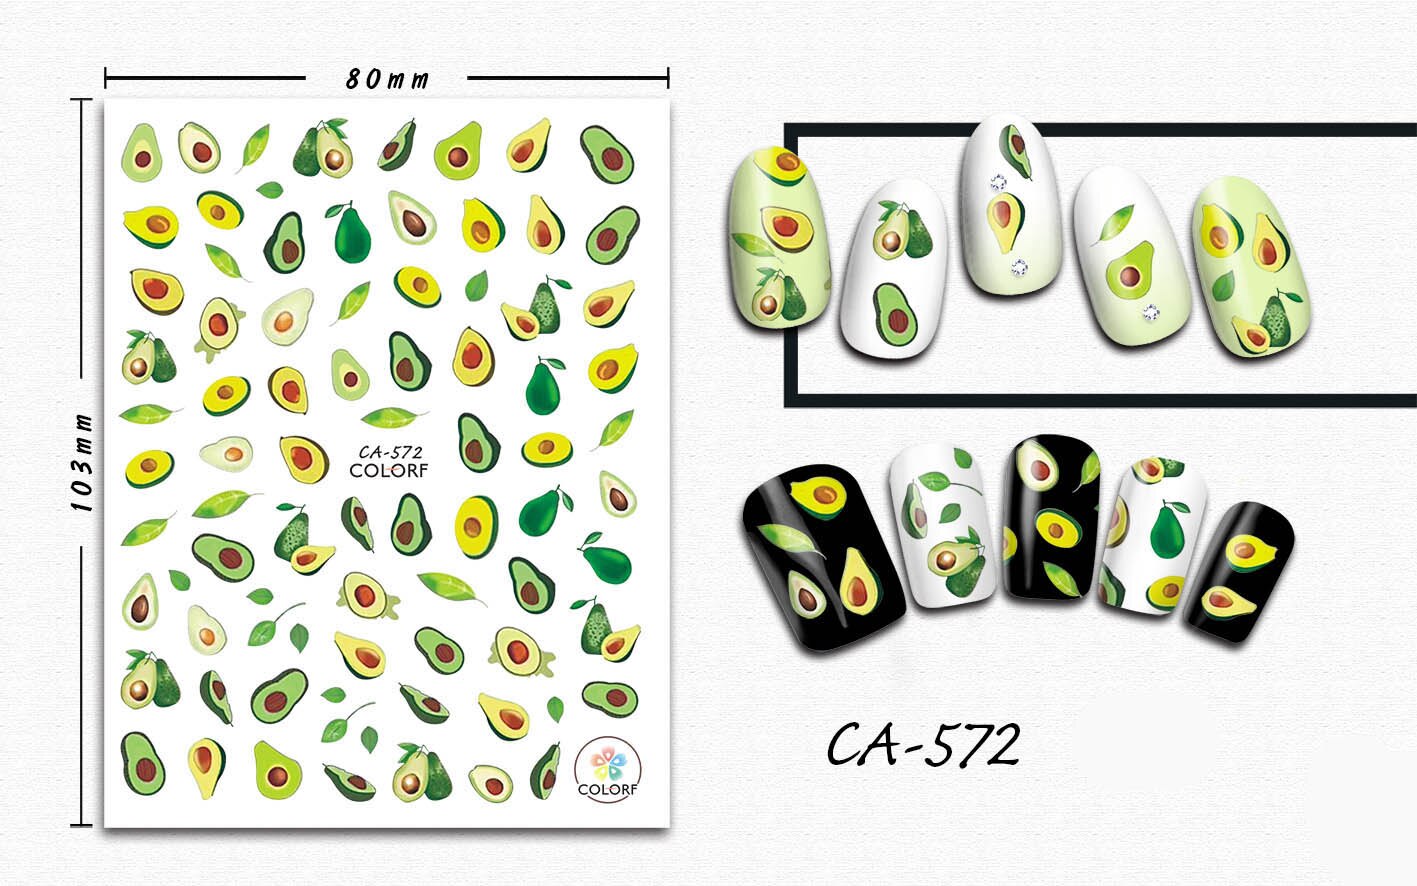 3D Nail Sticker Avocado Fruit Nail Art Decoraties Manicure Stickers Decals Slider Nagels Folie Decoraciones Accessoires